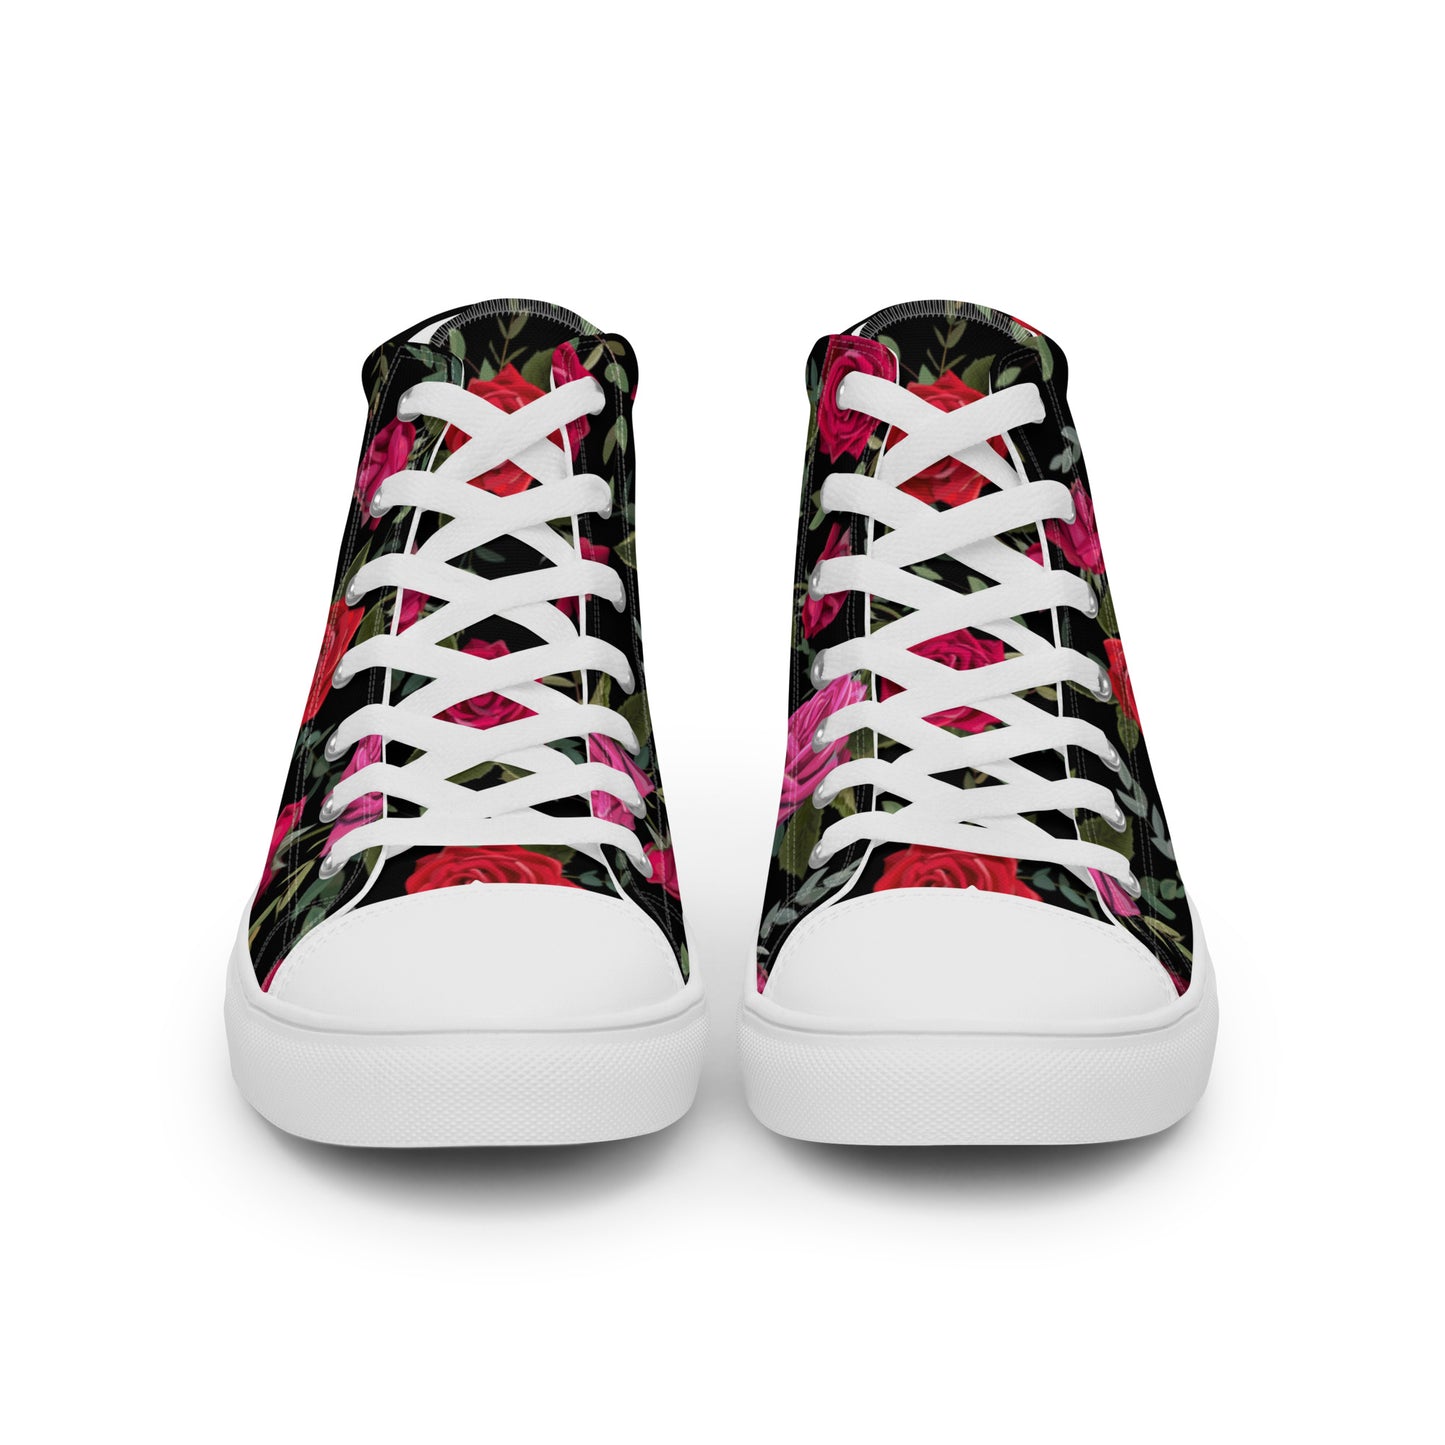 Women High Top Canvas Sneaker Shoe in Floral Design